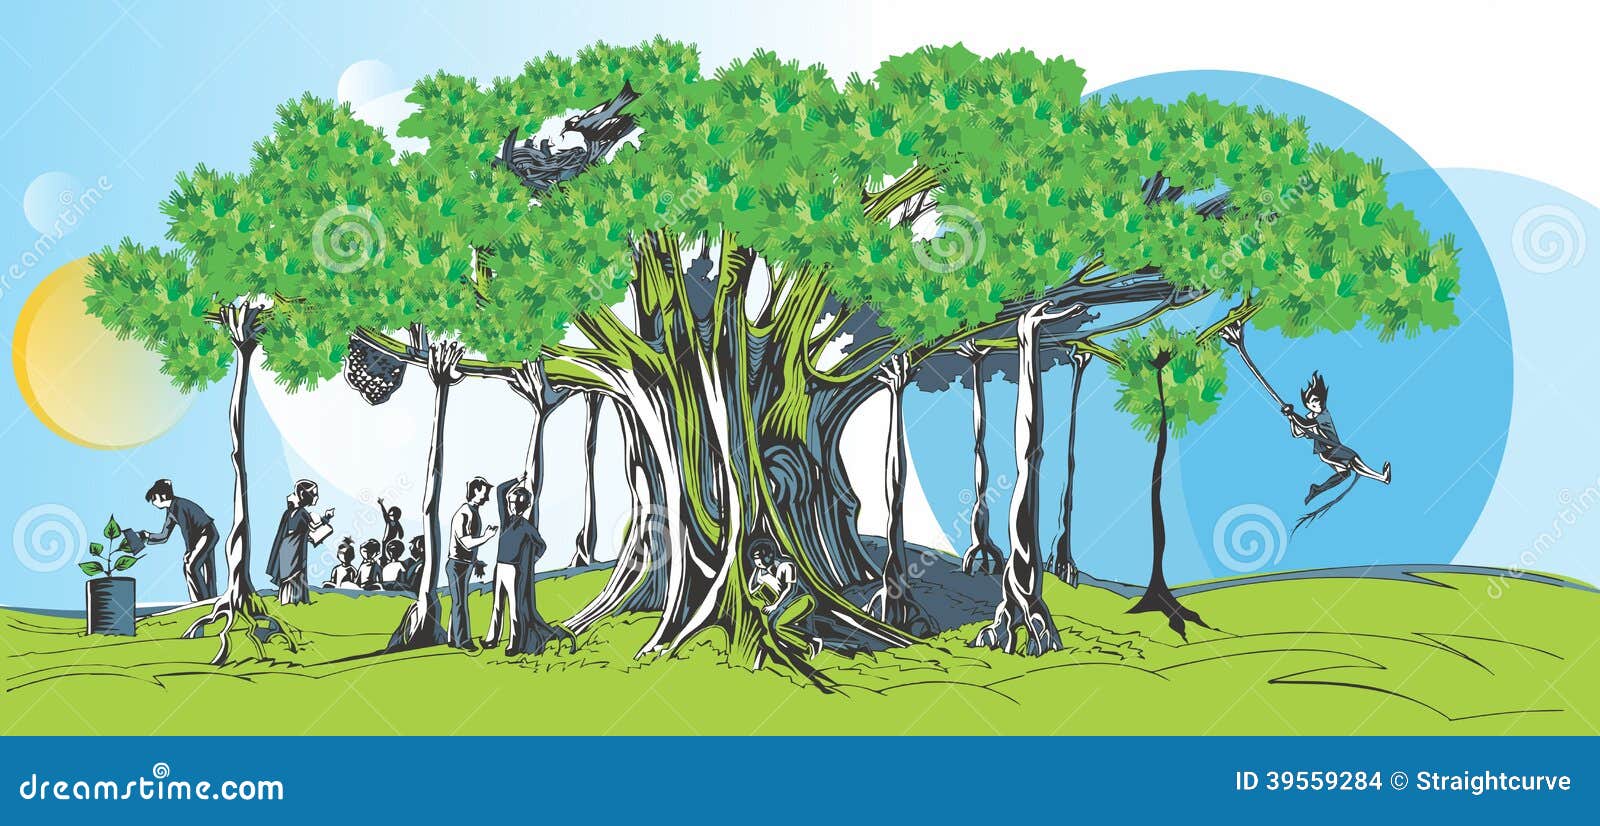 Baniyan Tree Illustration Illustration 39559284 - Megapixl